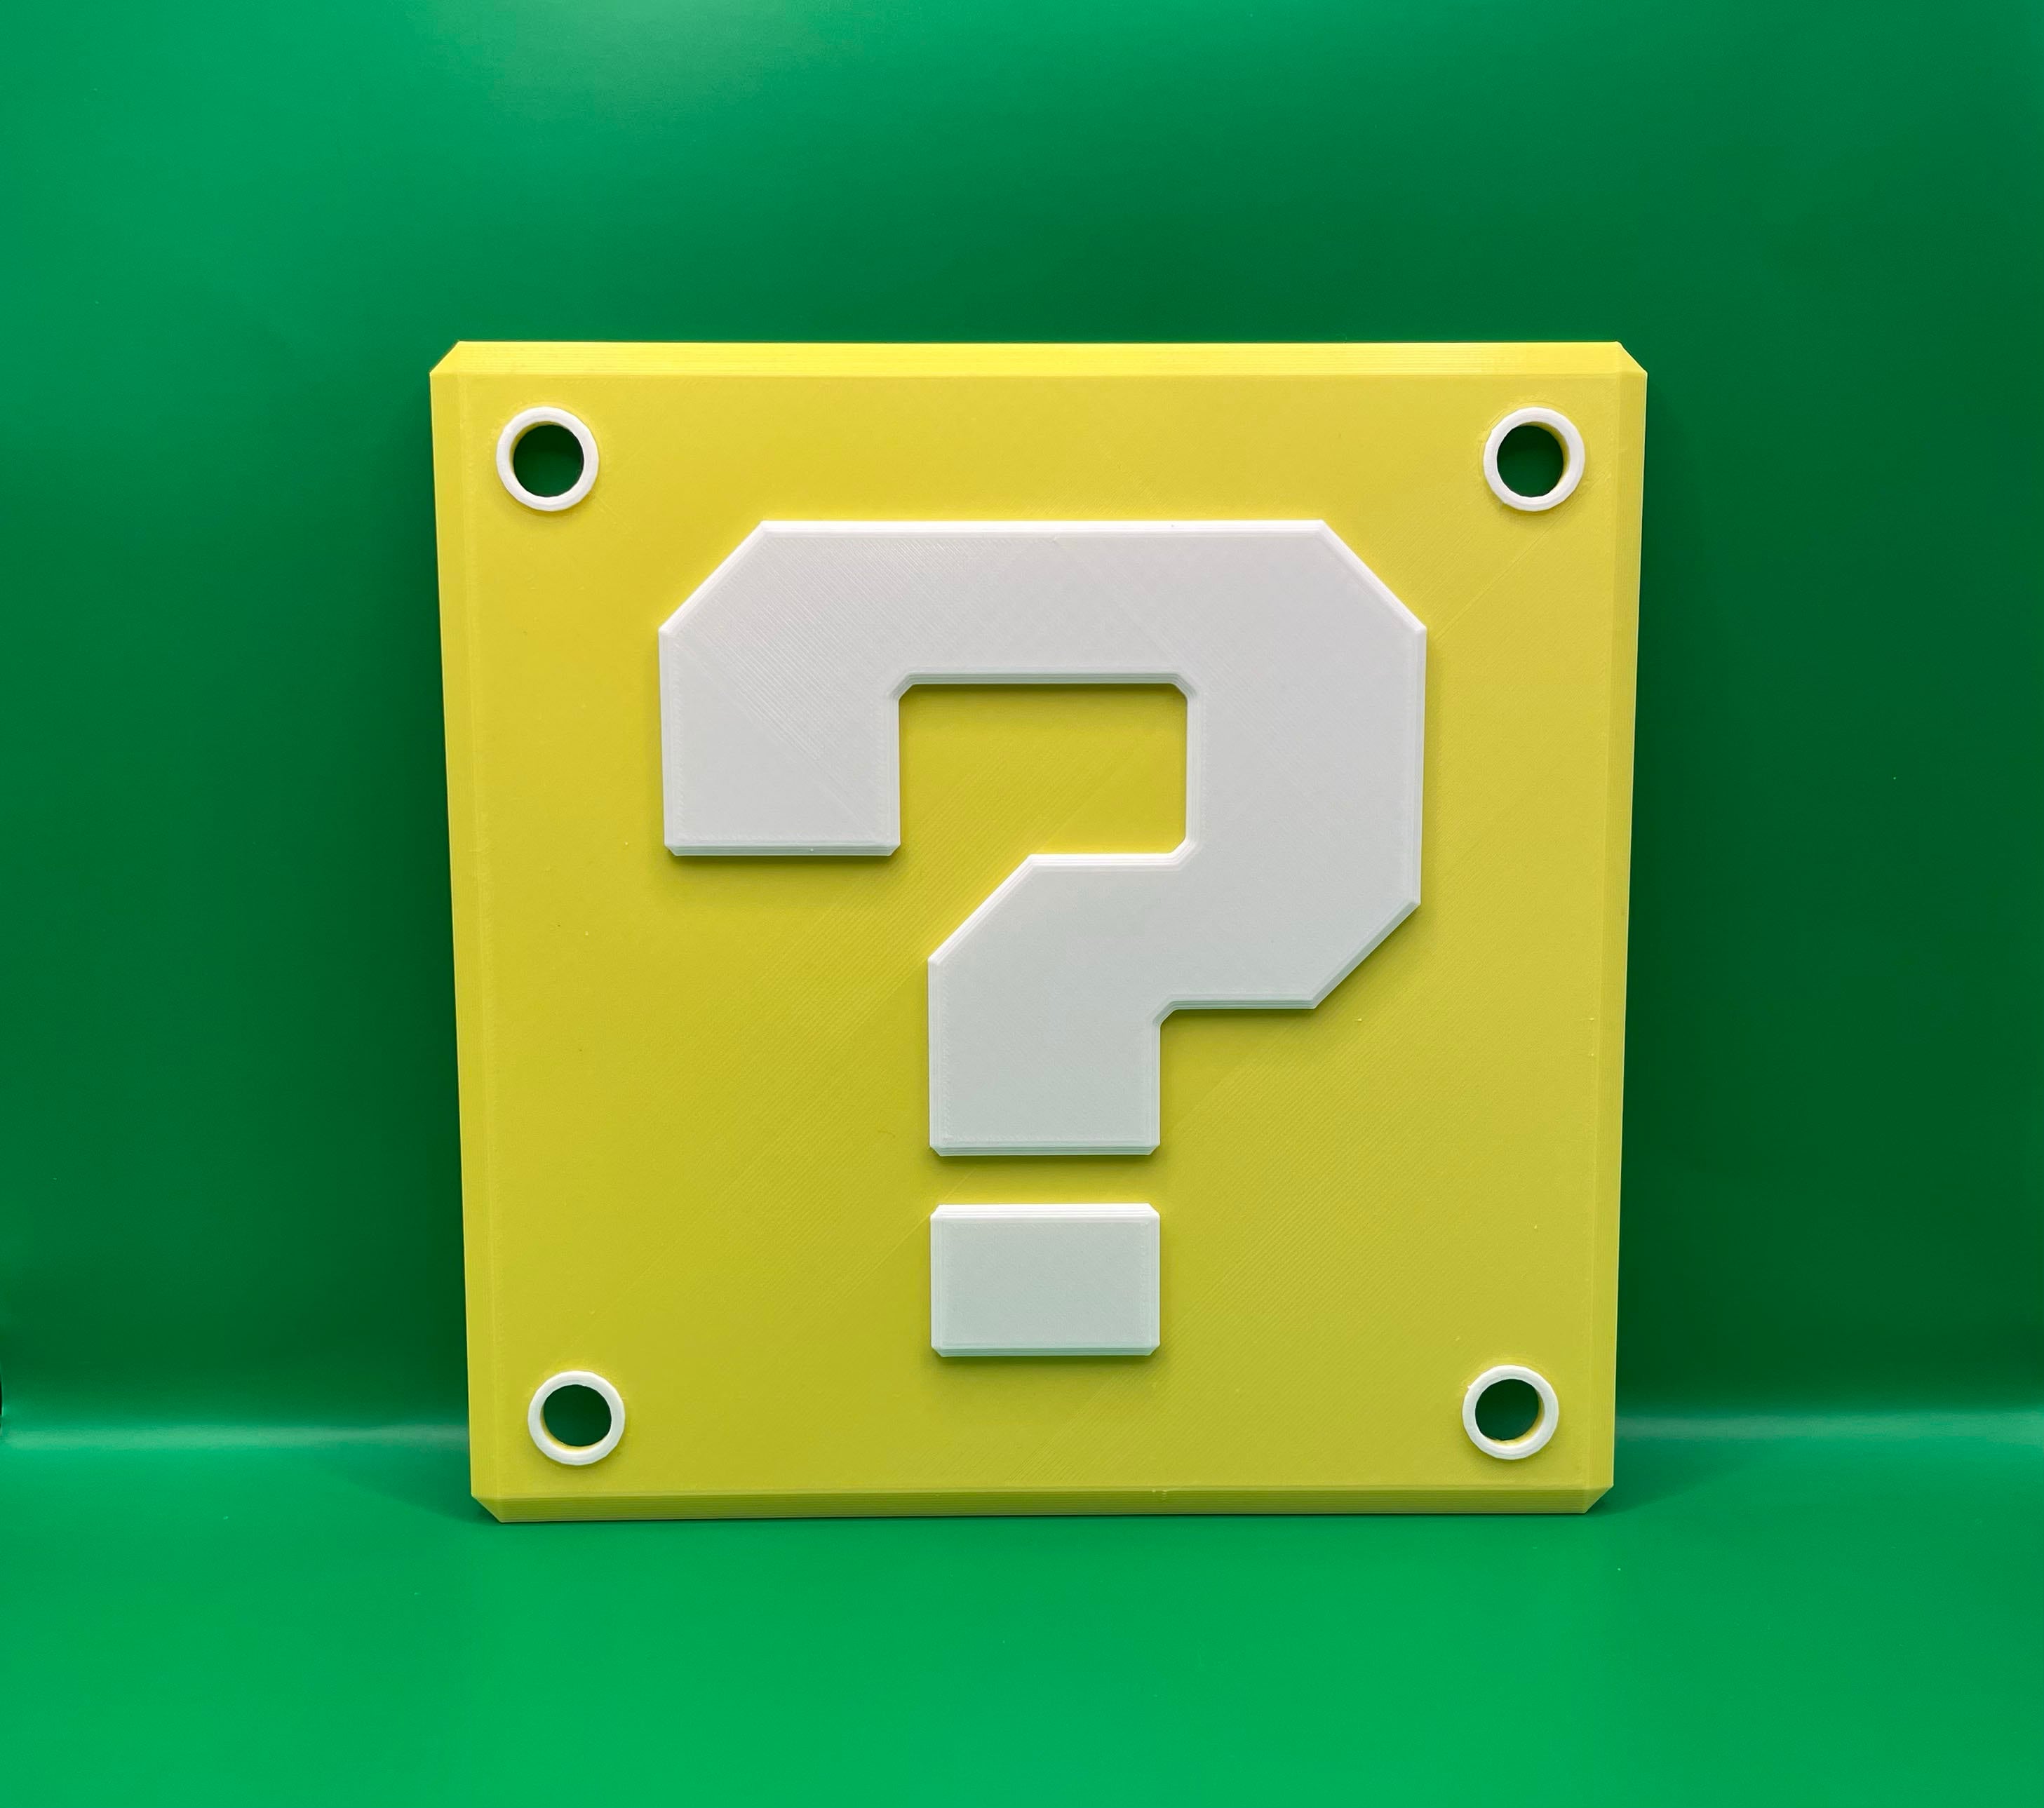 Super Mario Bros. Question Block Coin Bank Pixel Art Perler 